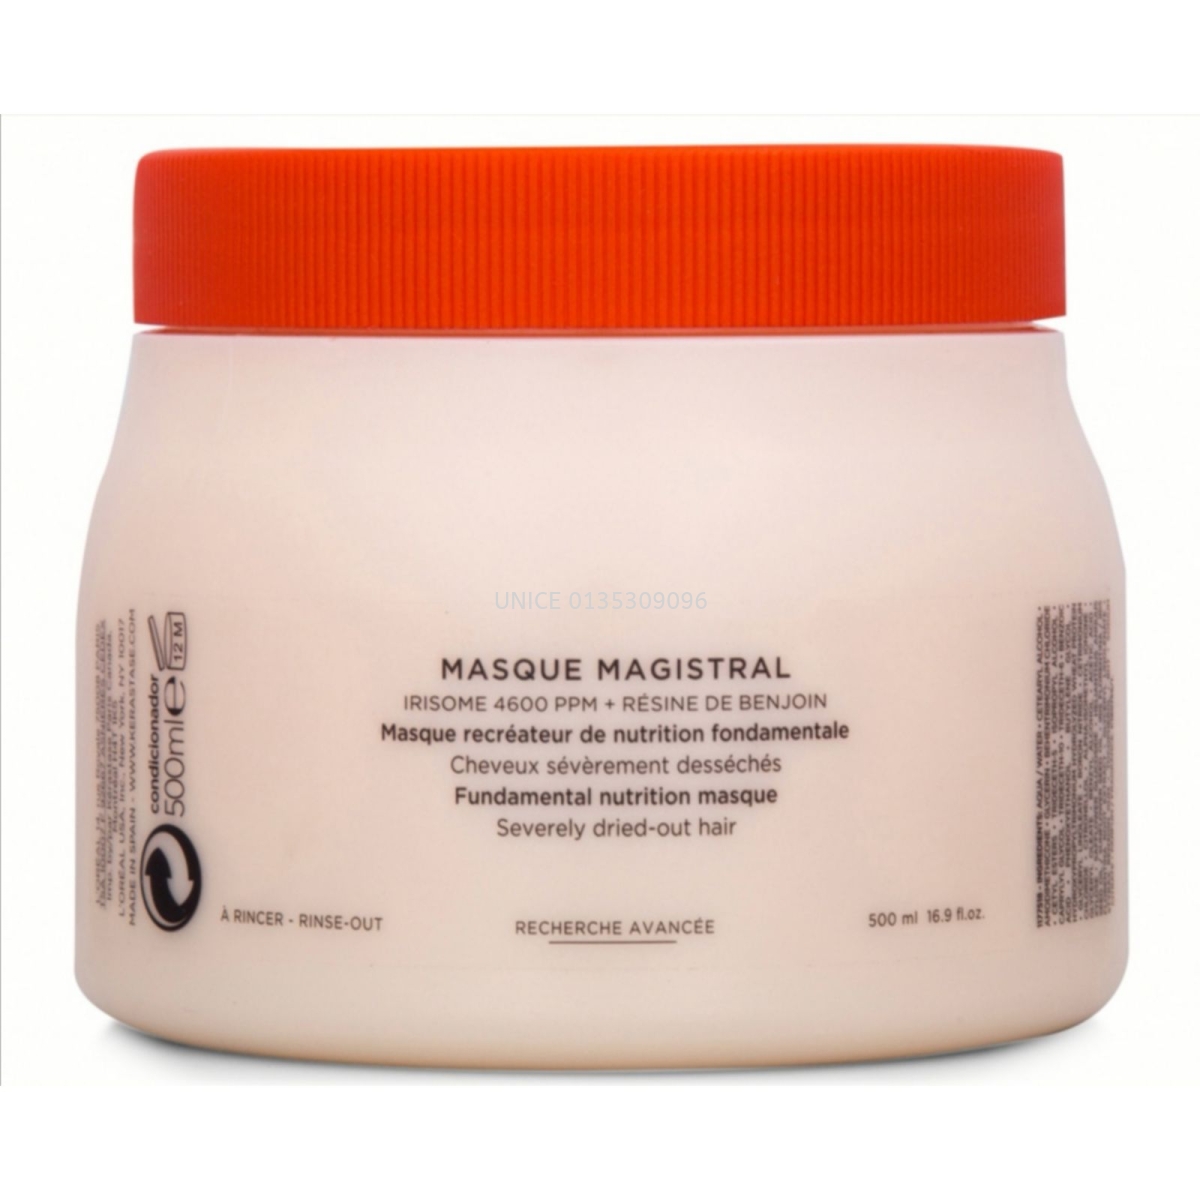 Masque Magistral Hair Mask 500ml KERASTASE HAIR & SCALP CARE TREATMENT  Johor Bahru (JB), Malaysia Supplier, Wholesaler | UNICE MARKETING SDN BHD